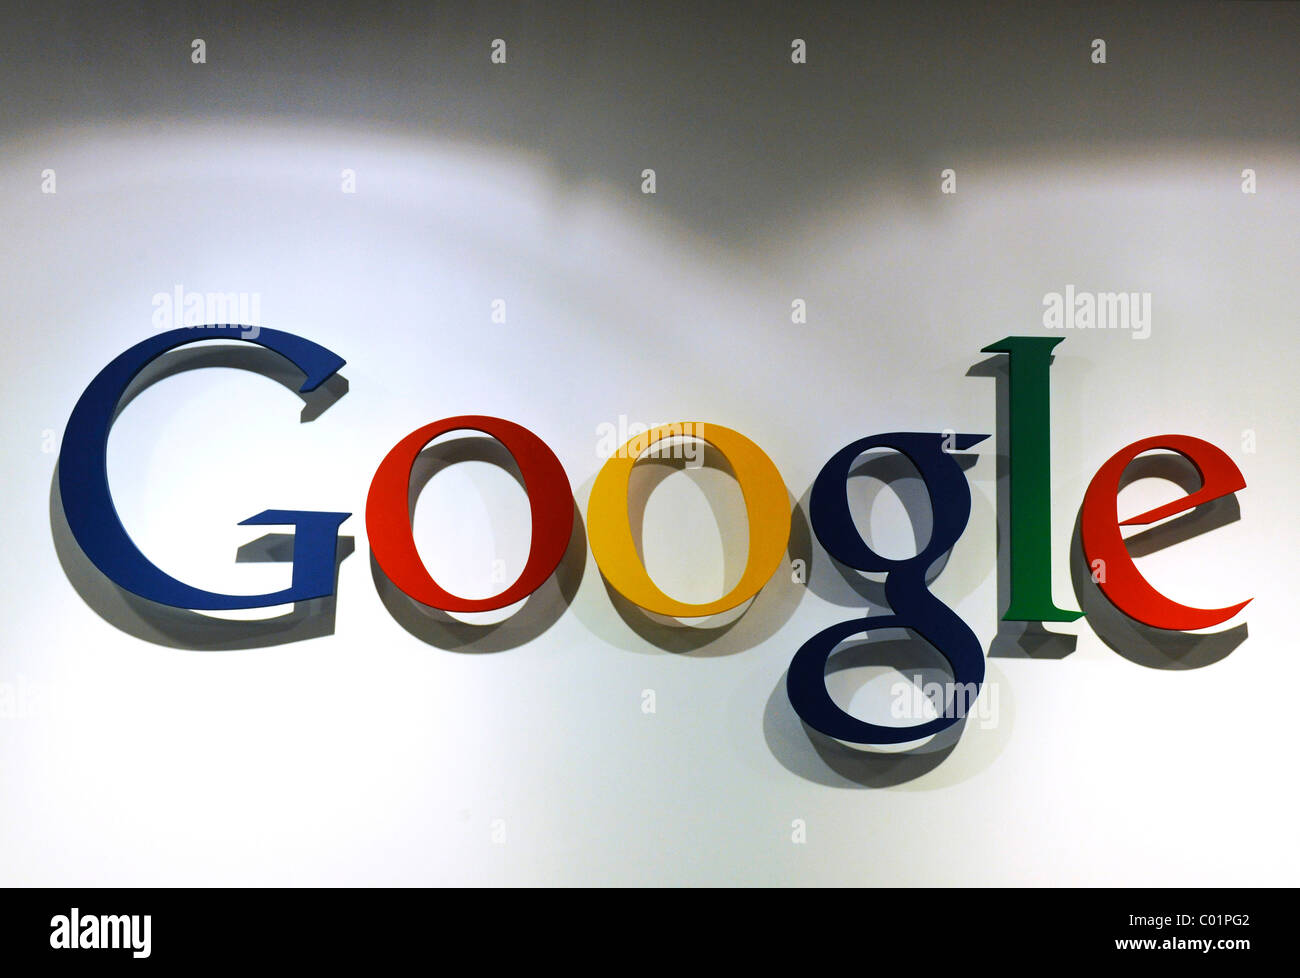 Google logo on a wall Stock Photo